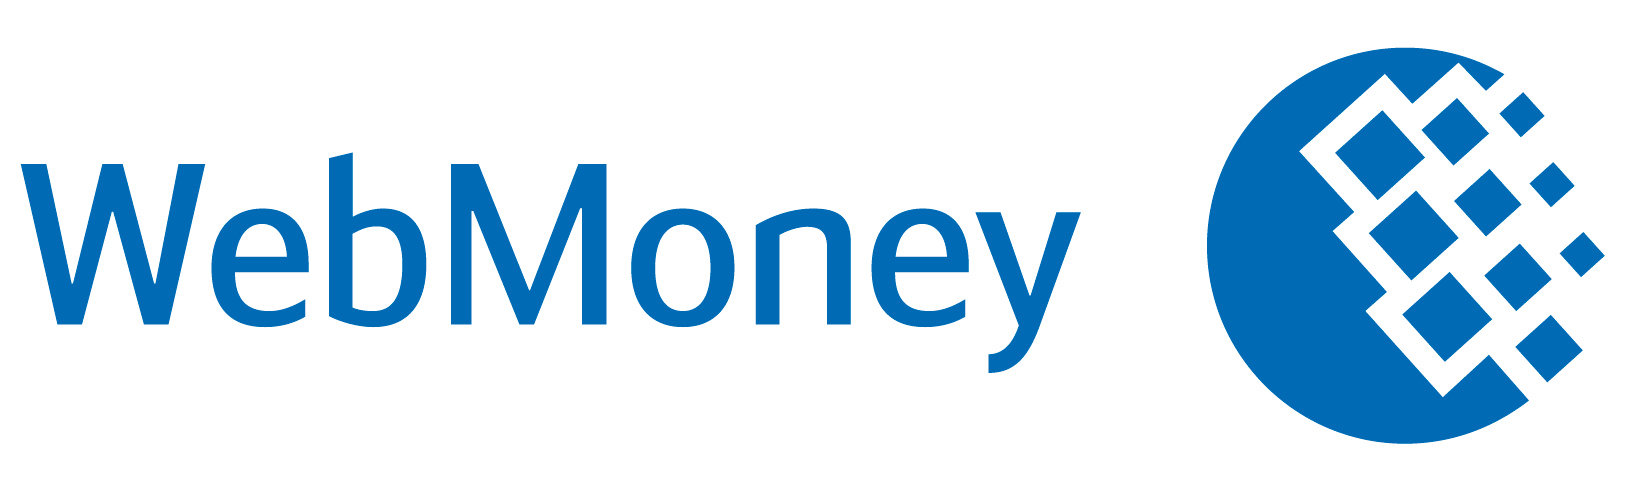 Webmoney Logo Transparent File